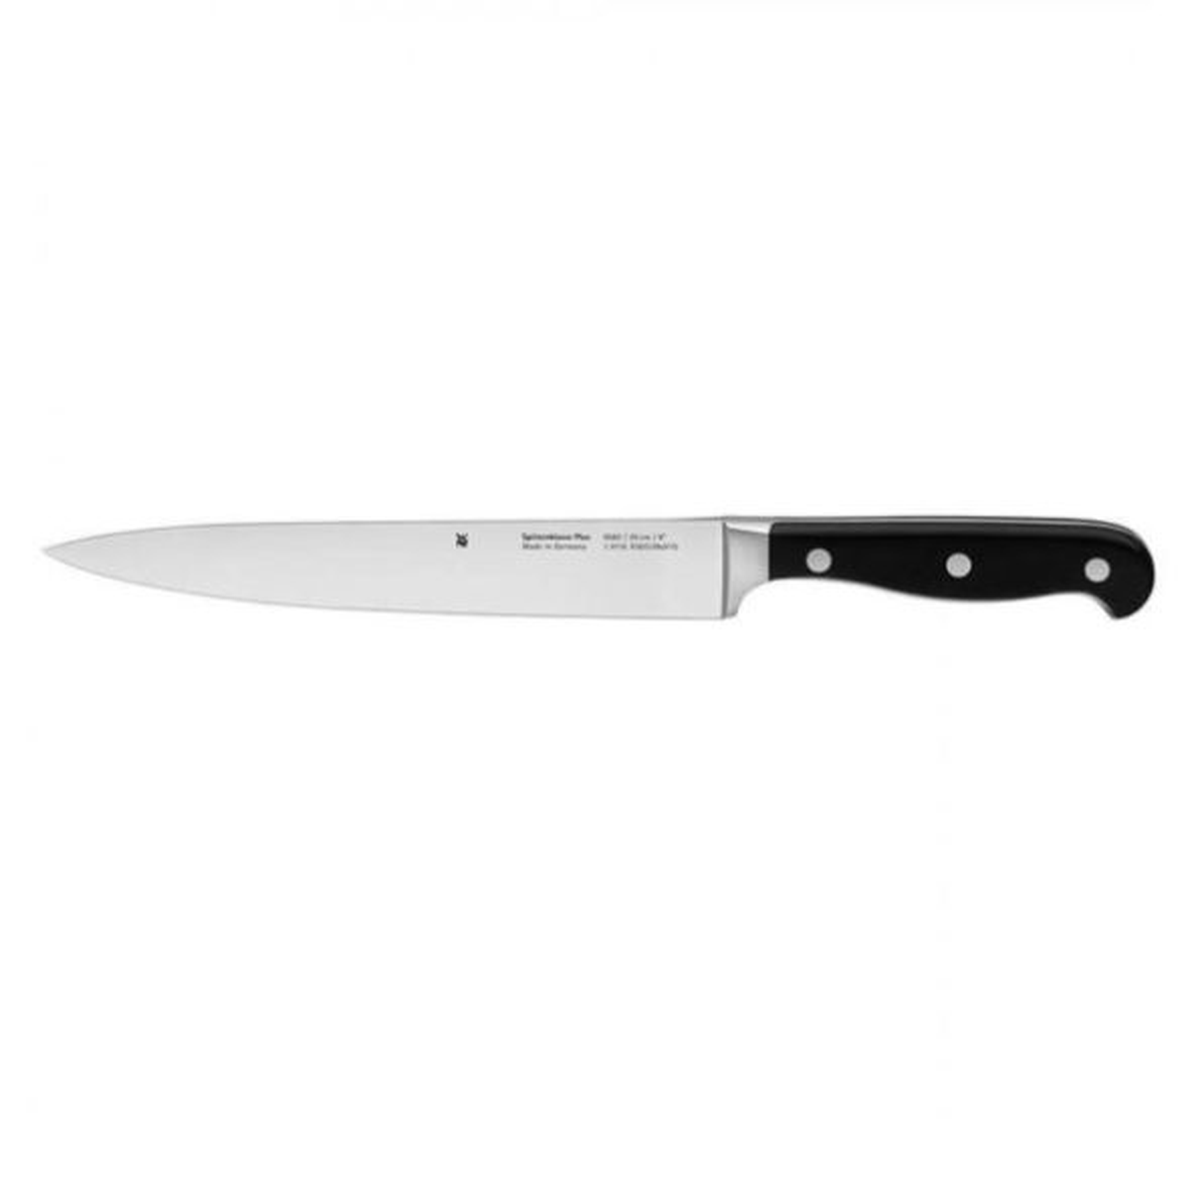 Equipamiento de cocina: guía de 8 cuchillos indispensables